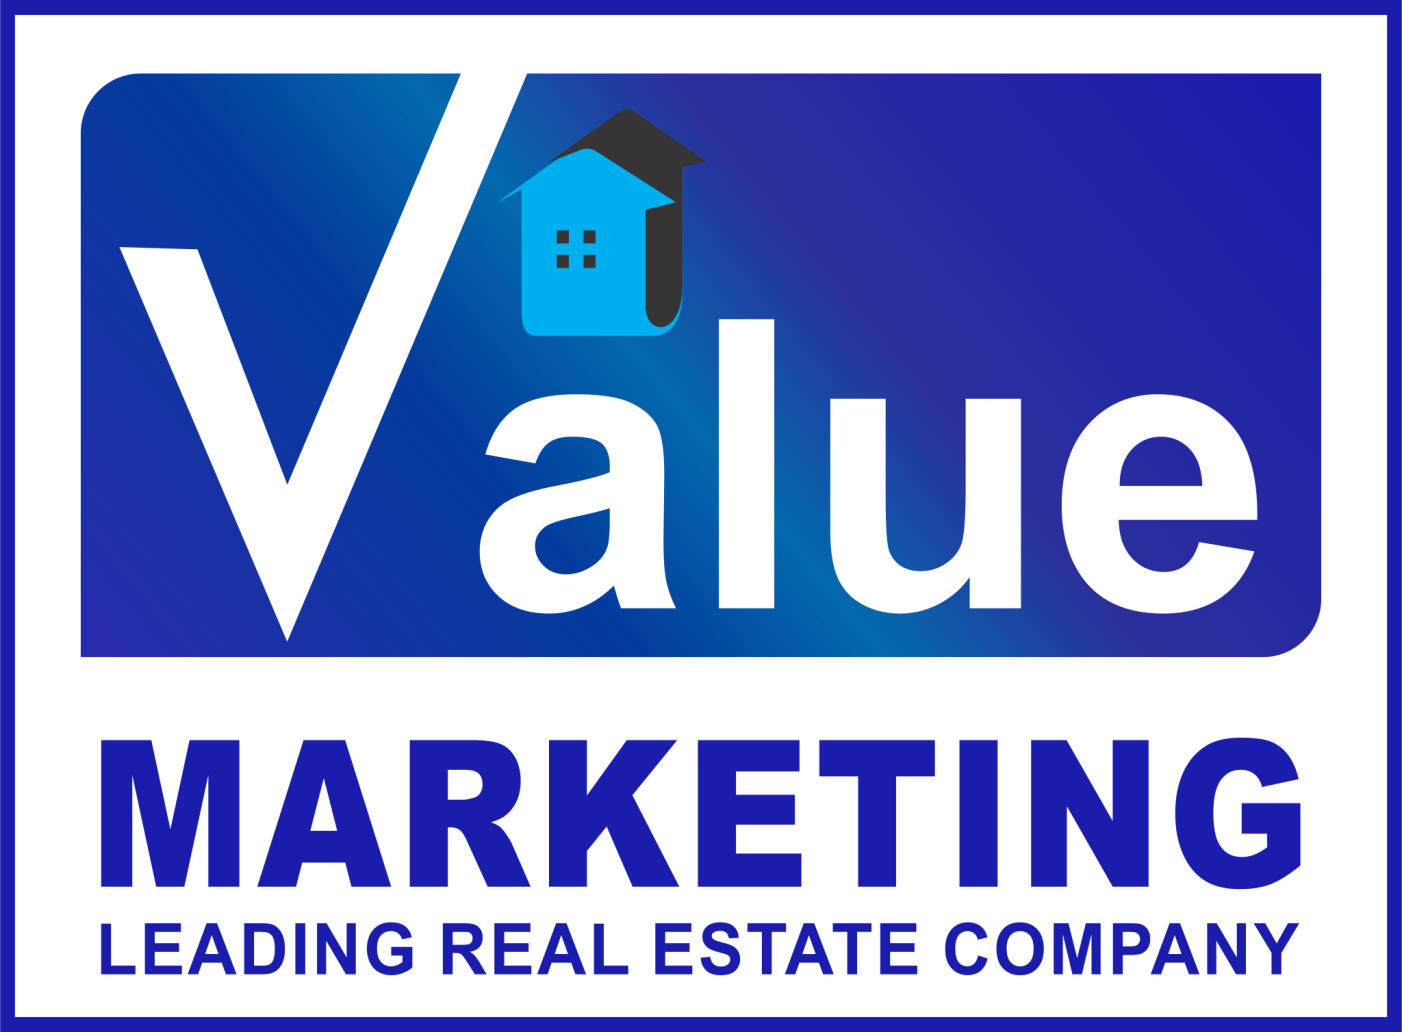 Value Marketing